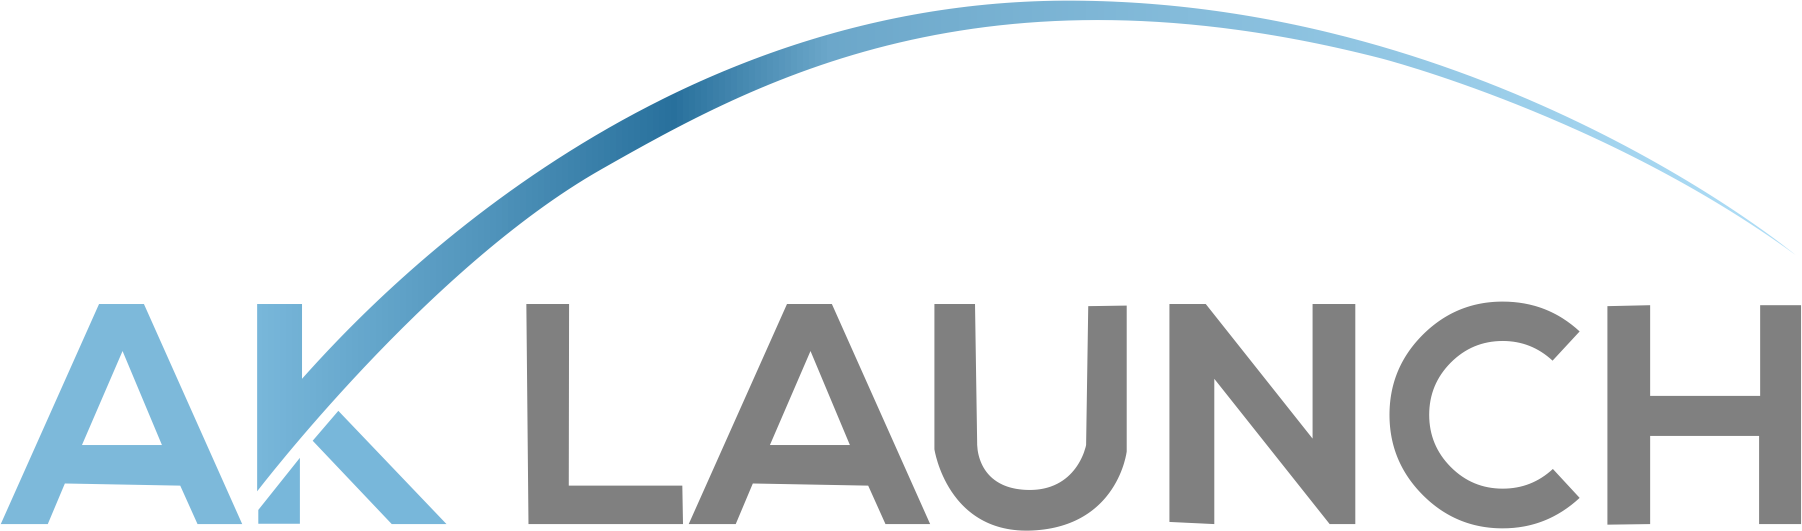 Aklaunch Logo